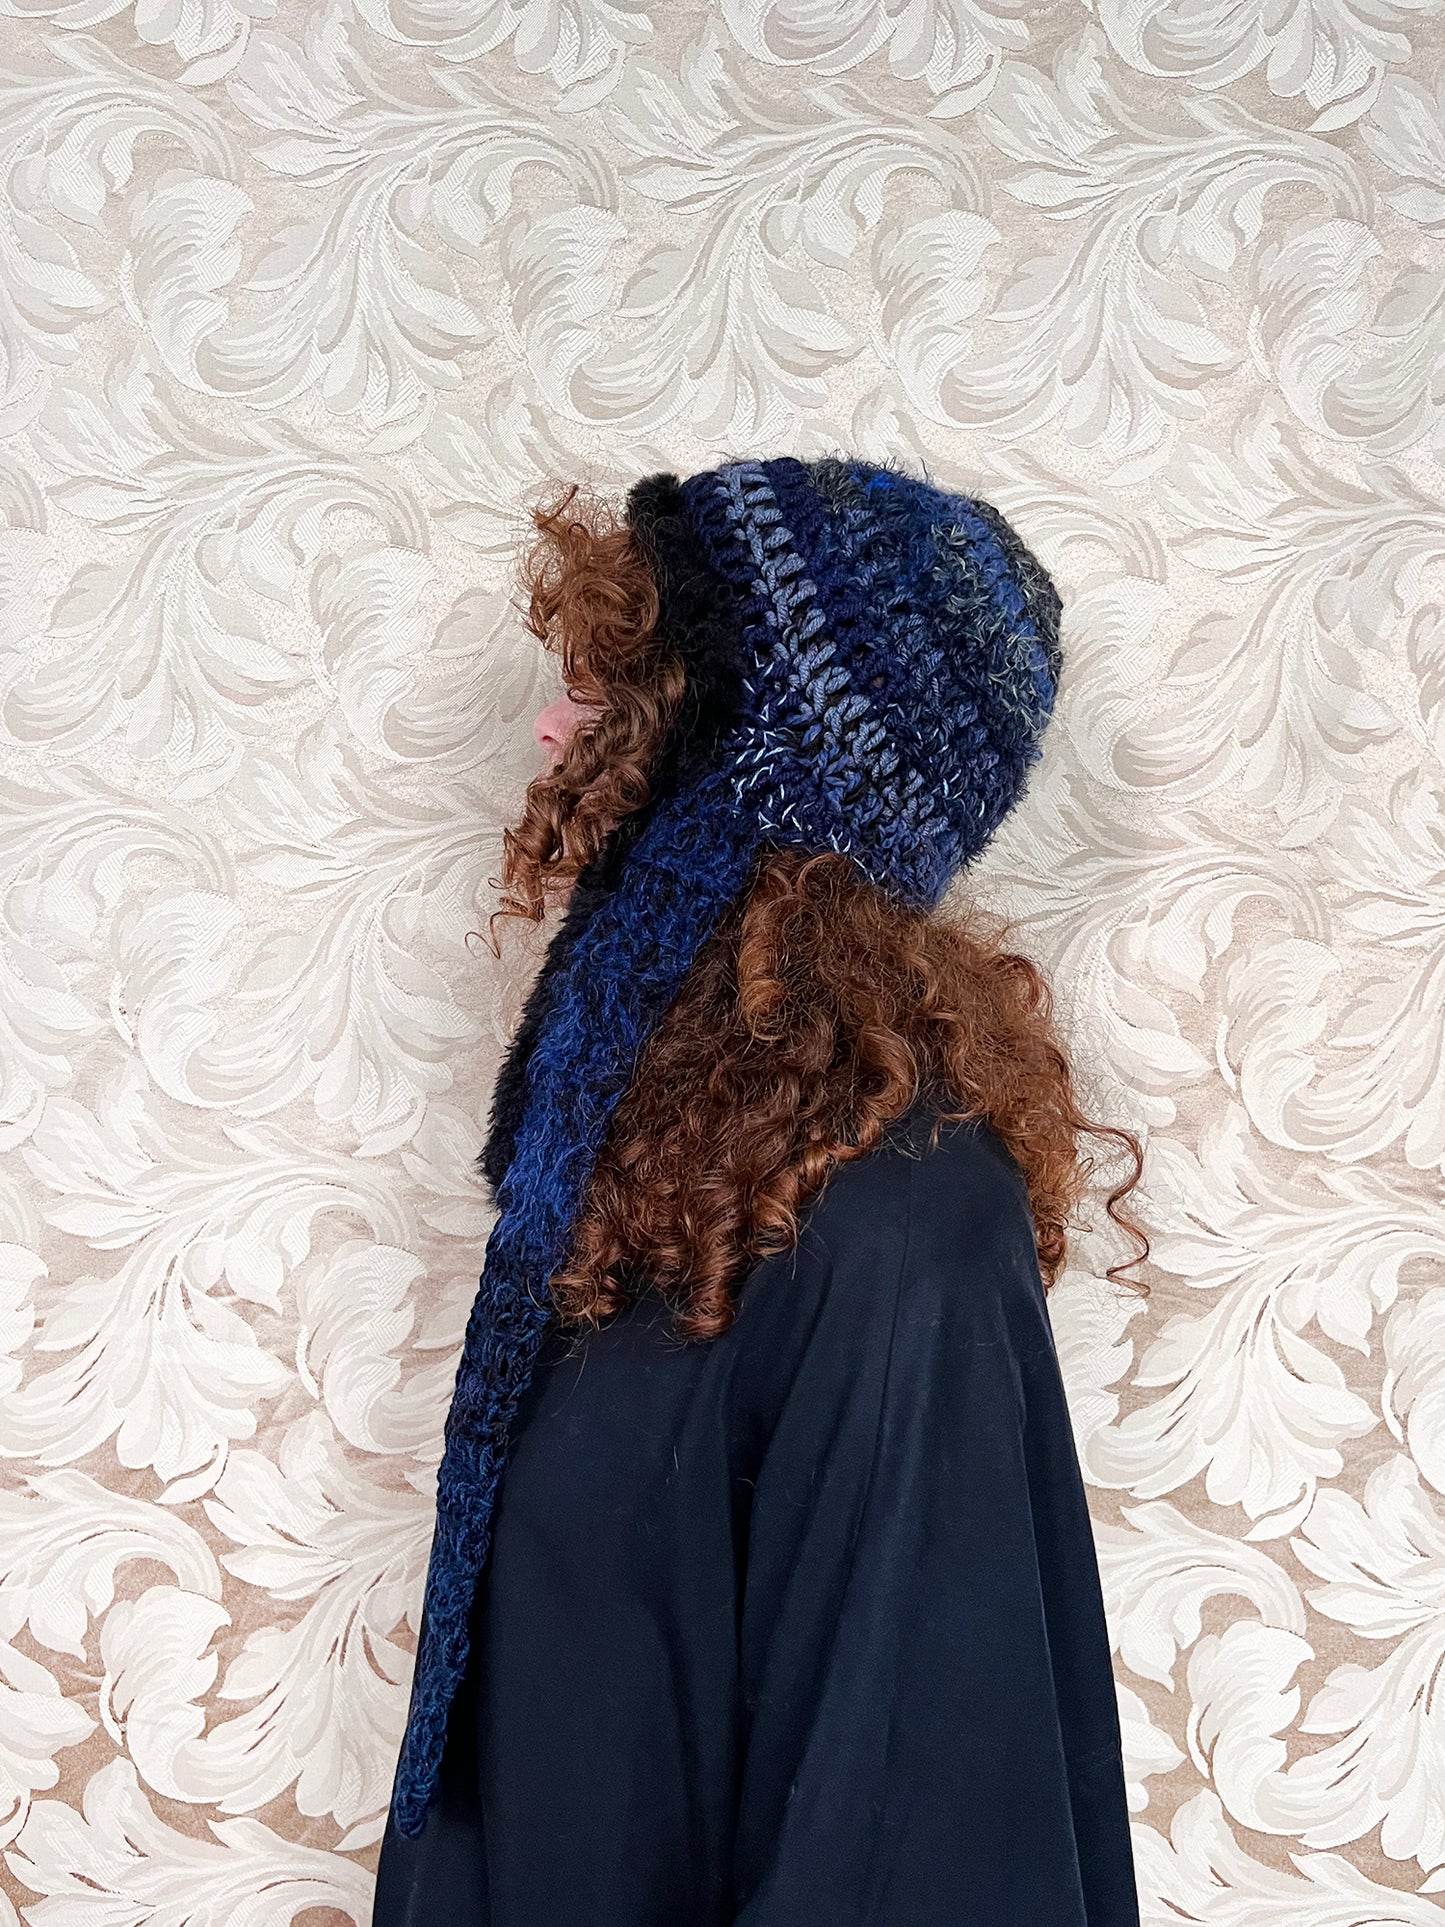 Cool Cat Crochet Hat #5 S/M